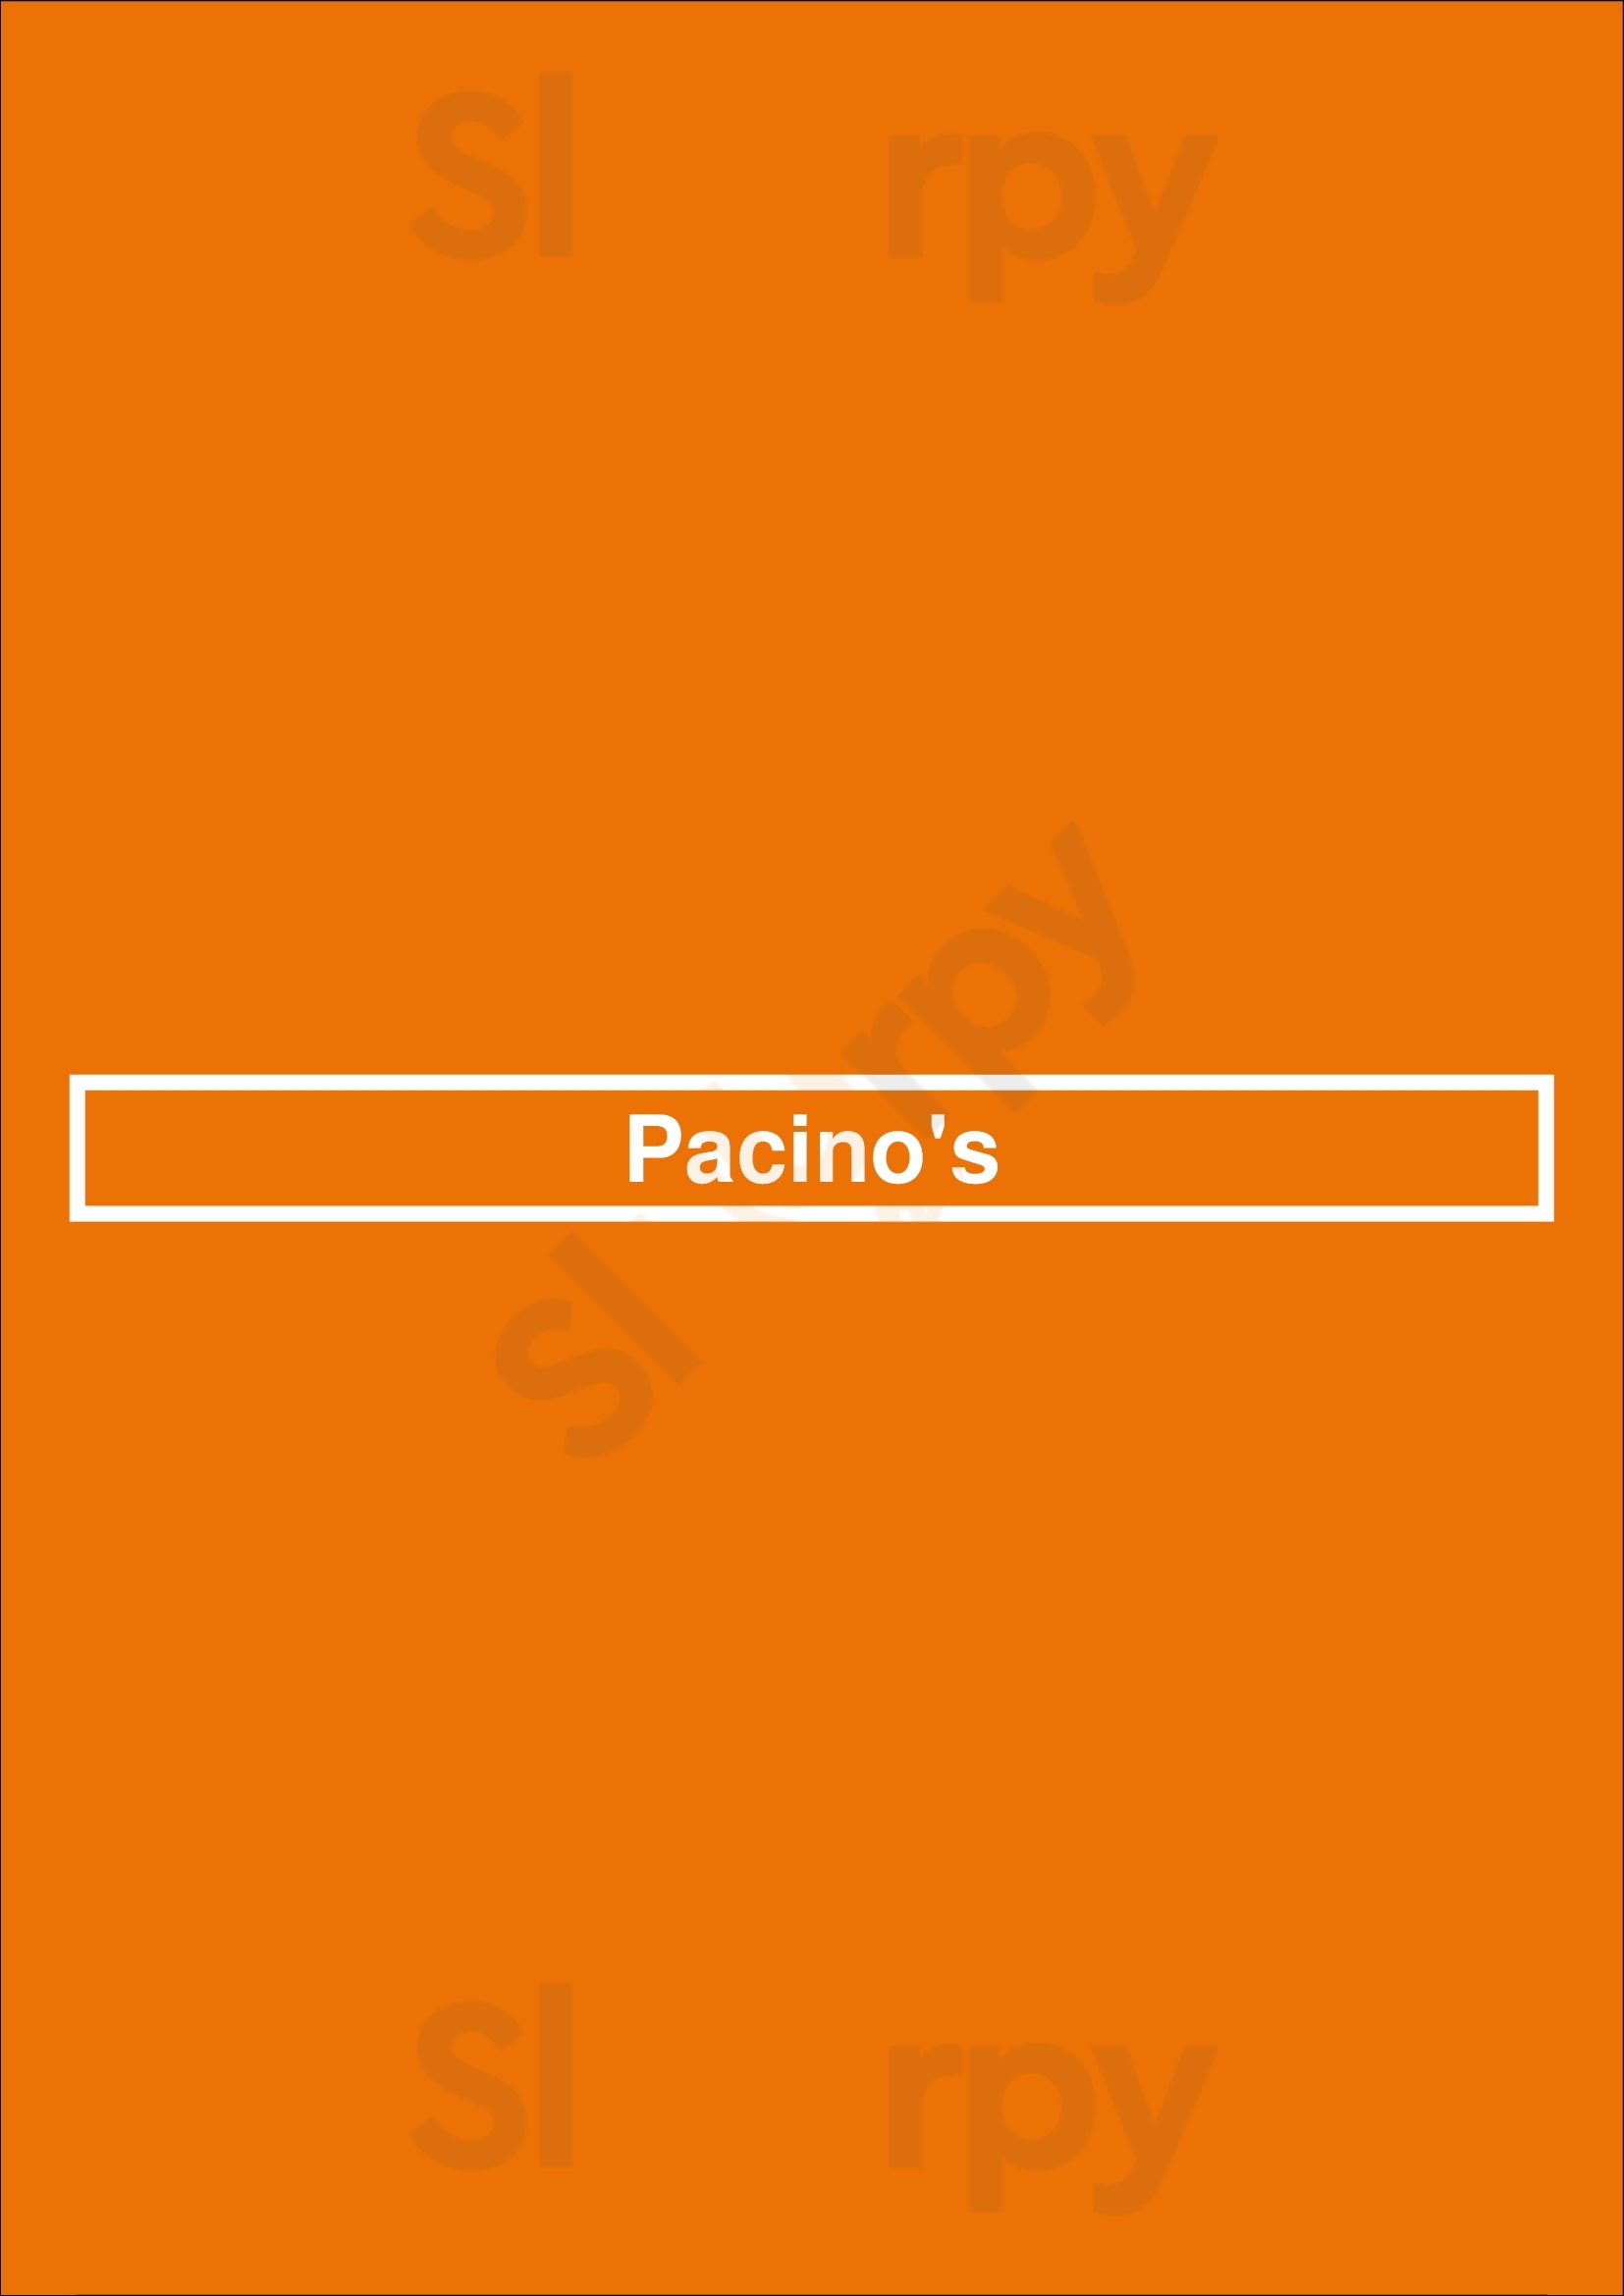 Pacino's Dublin Menu - 1